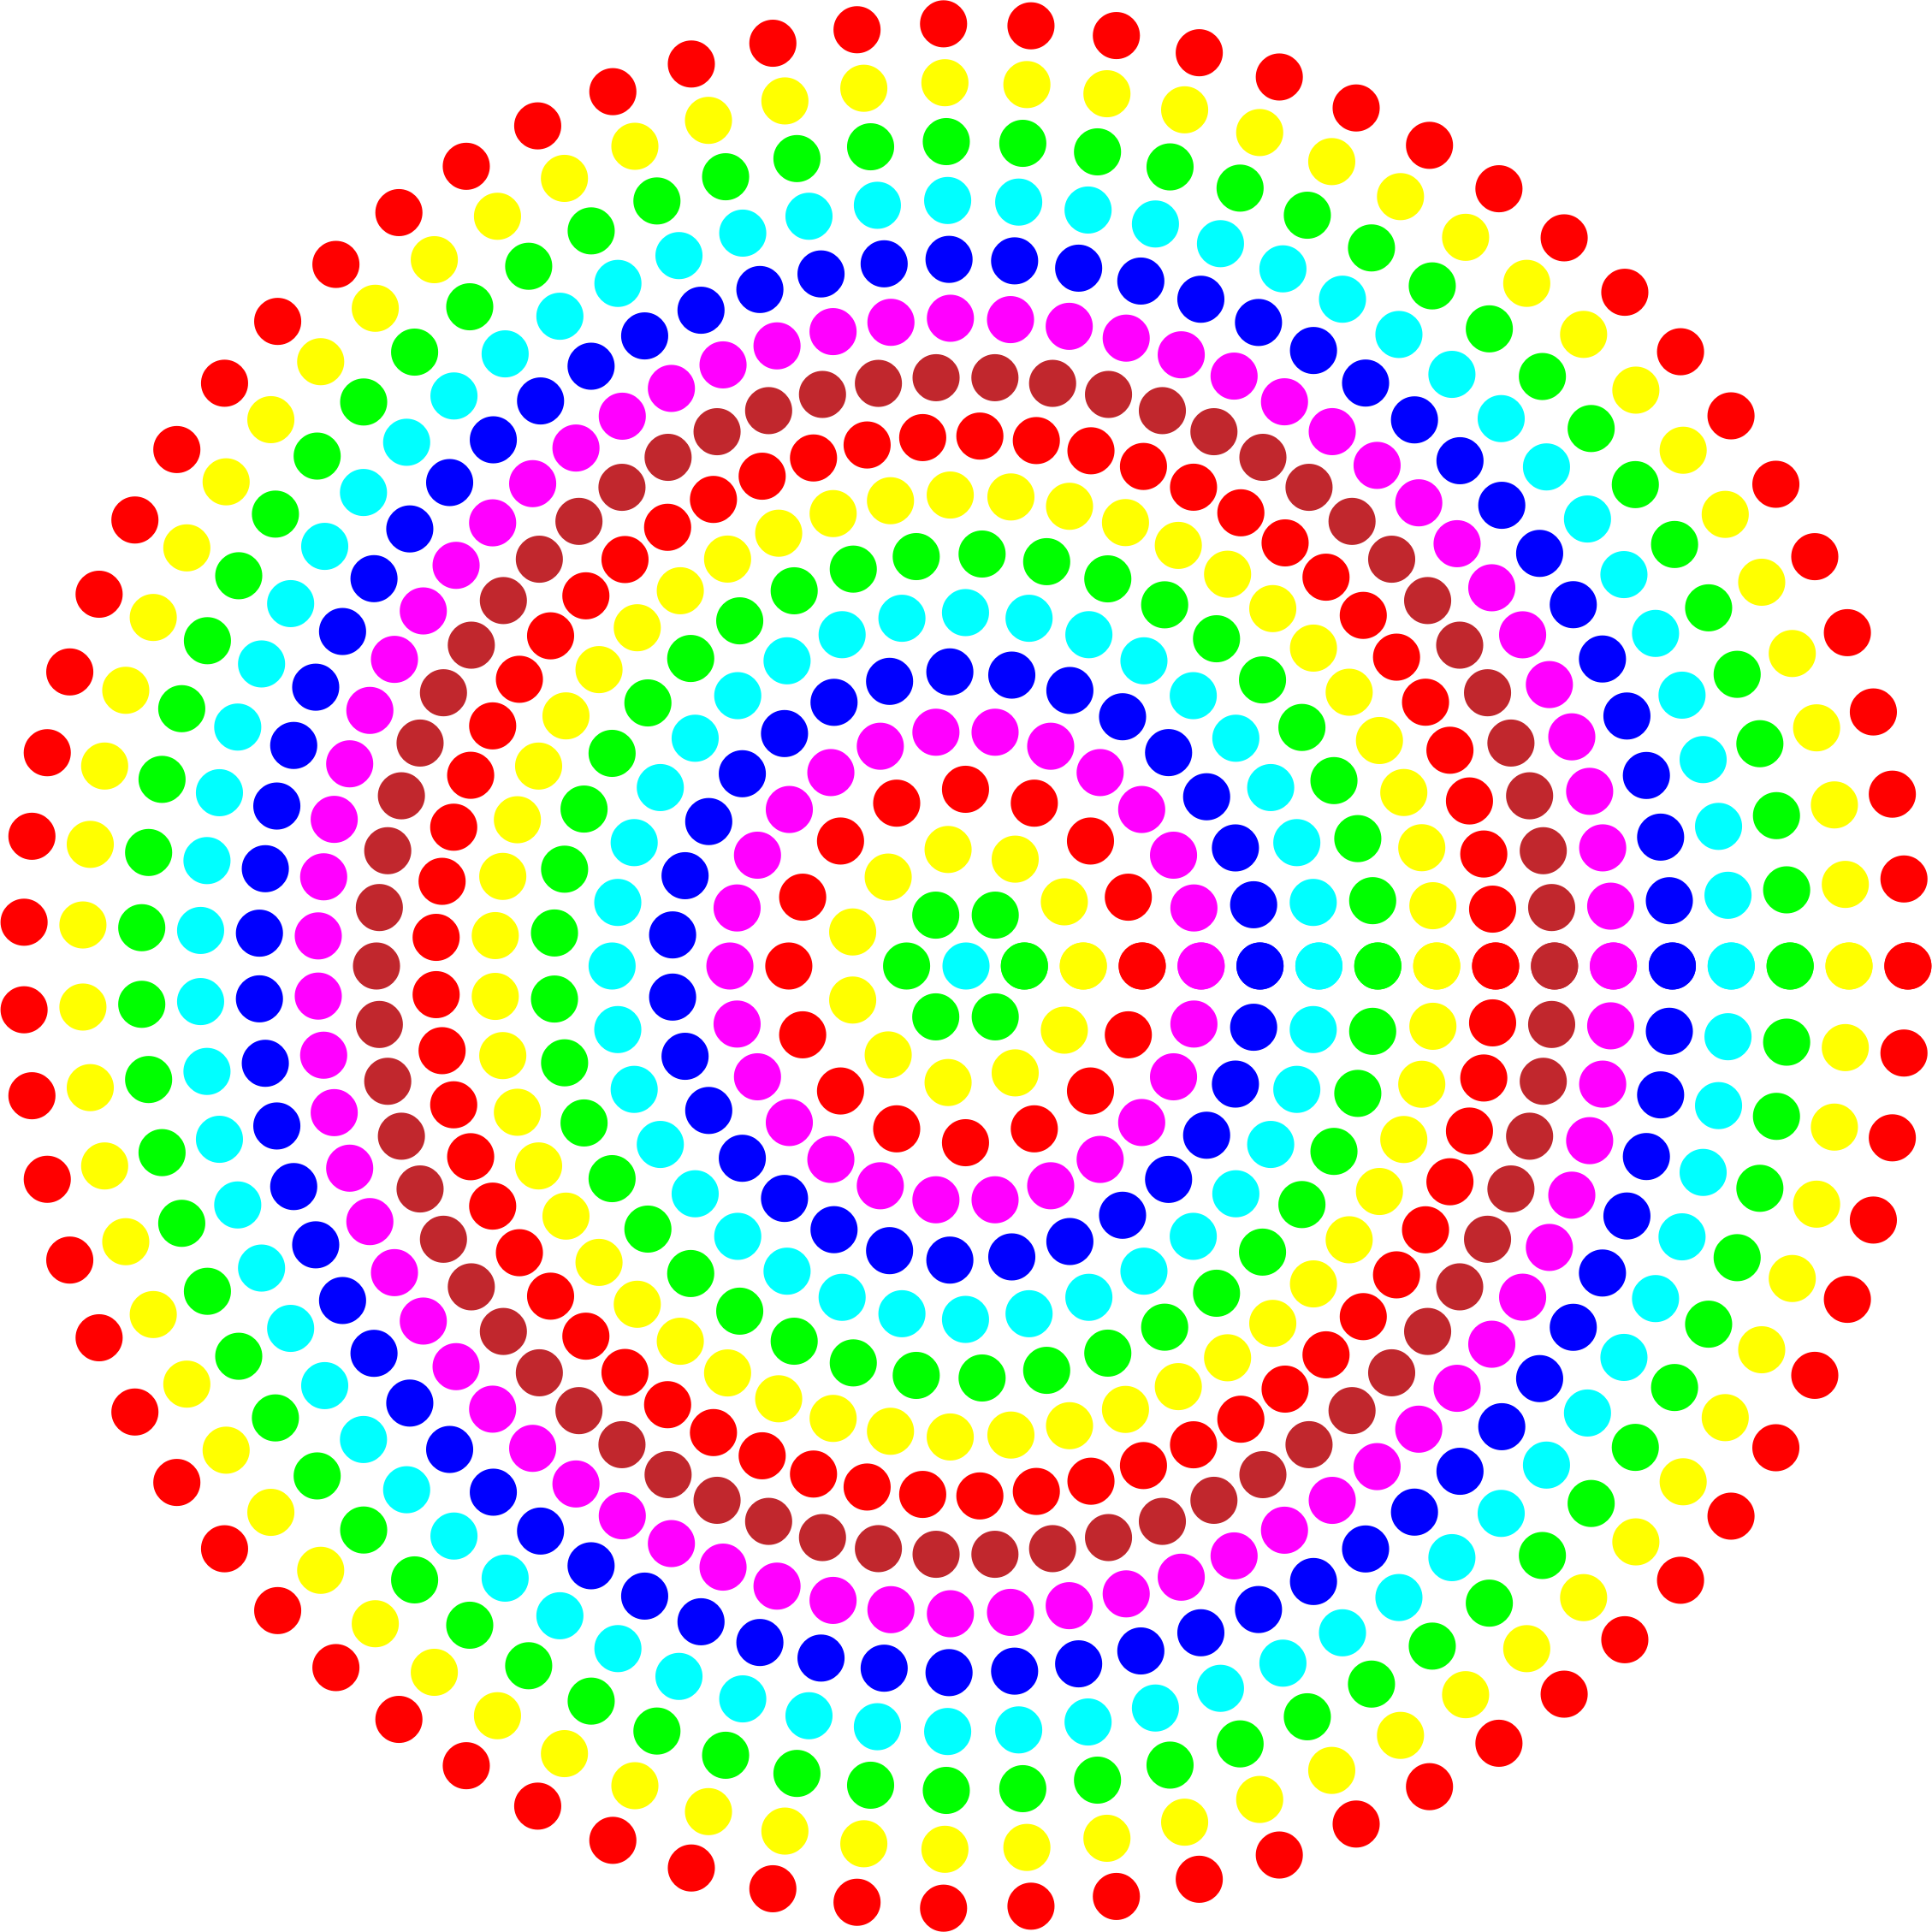 A Colorful Circle Of Dots